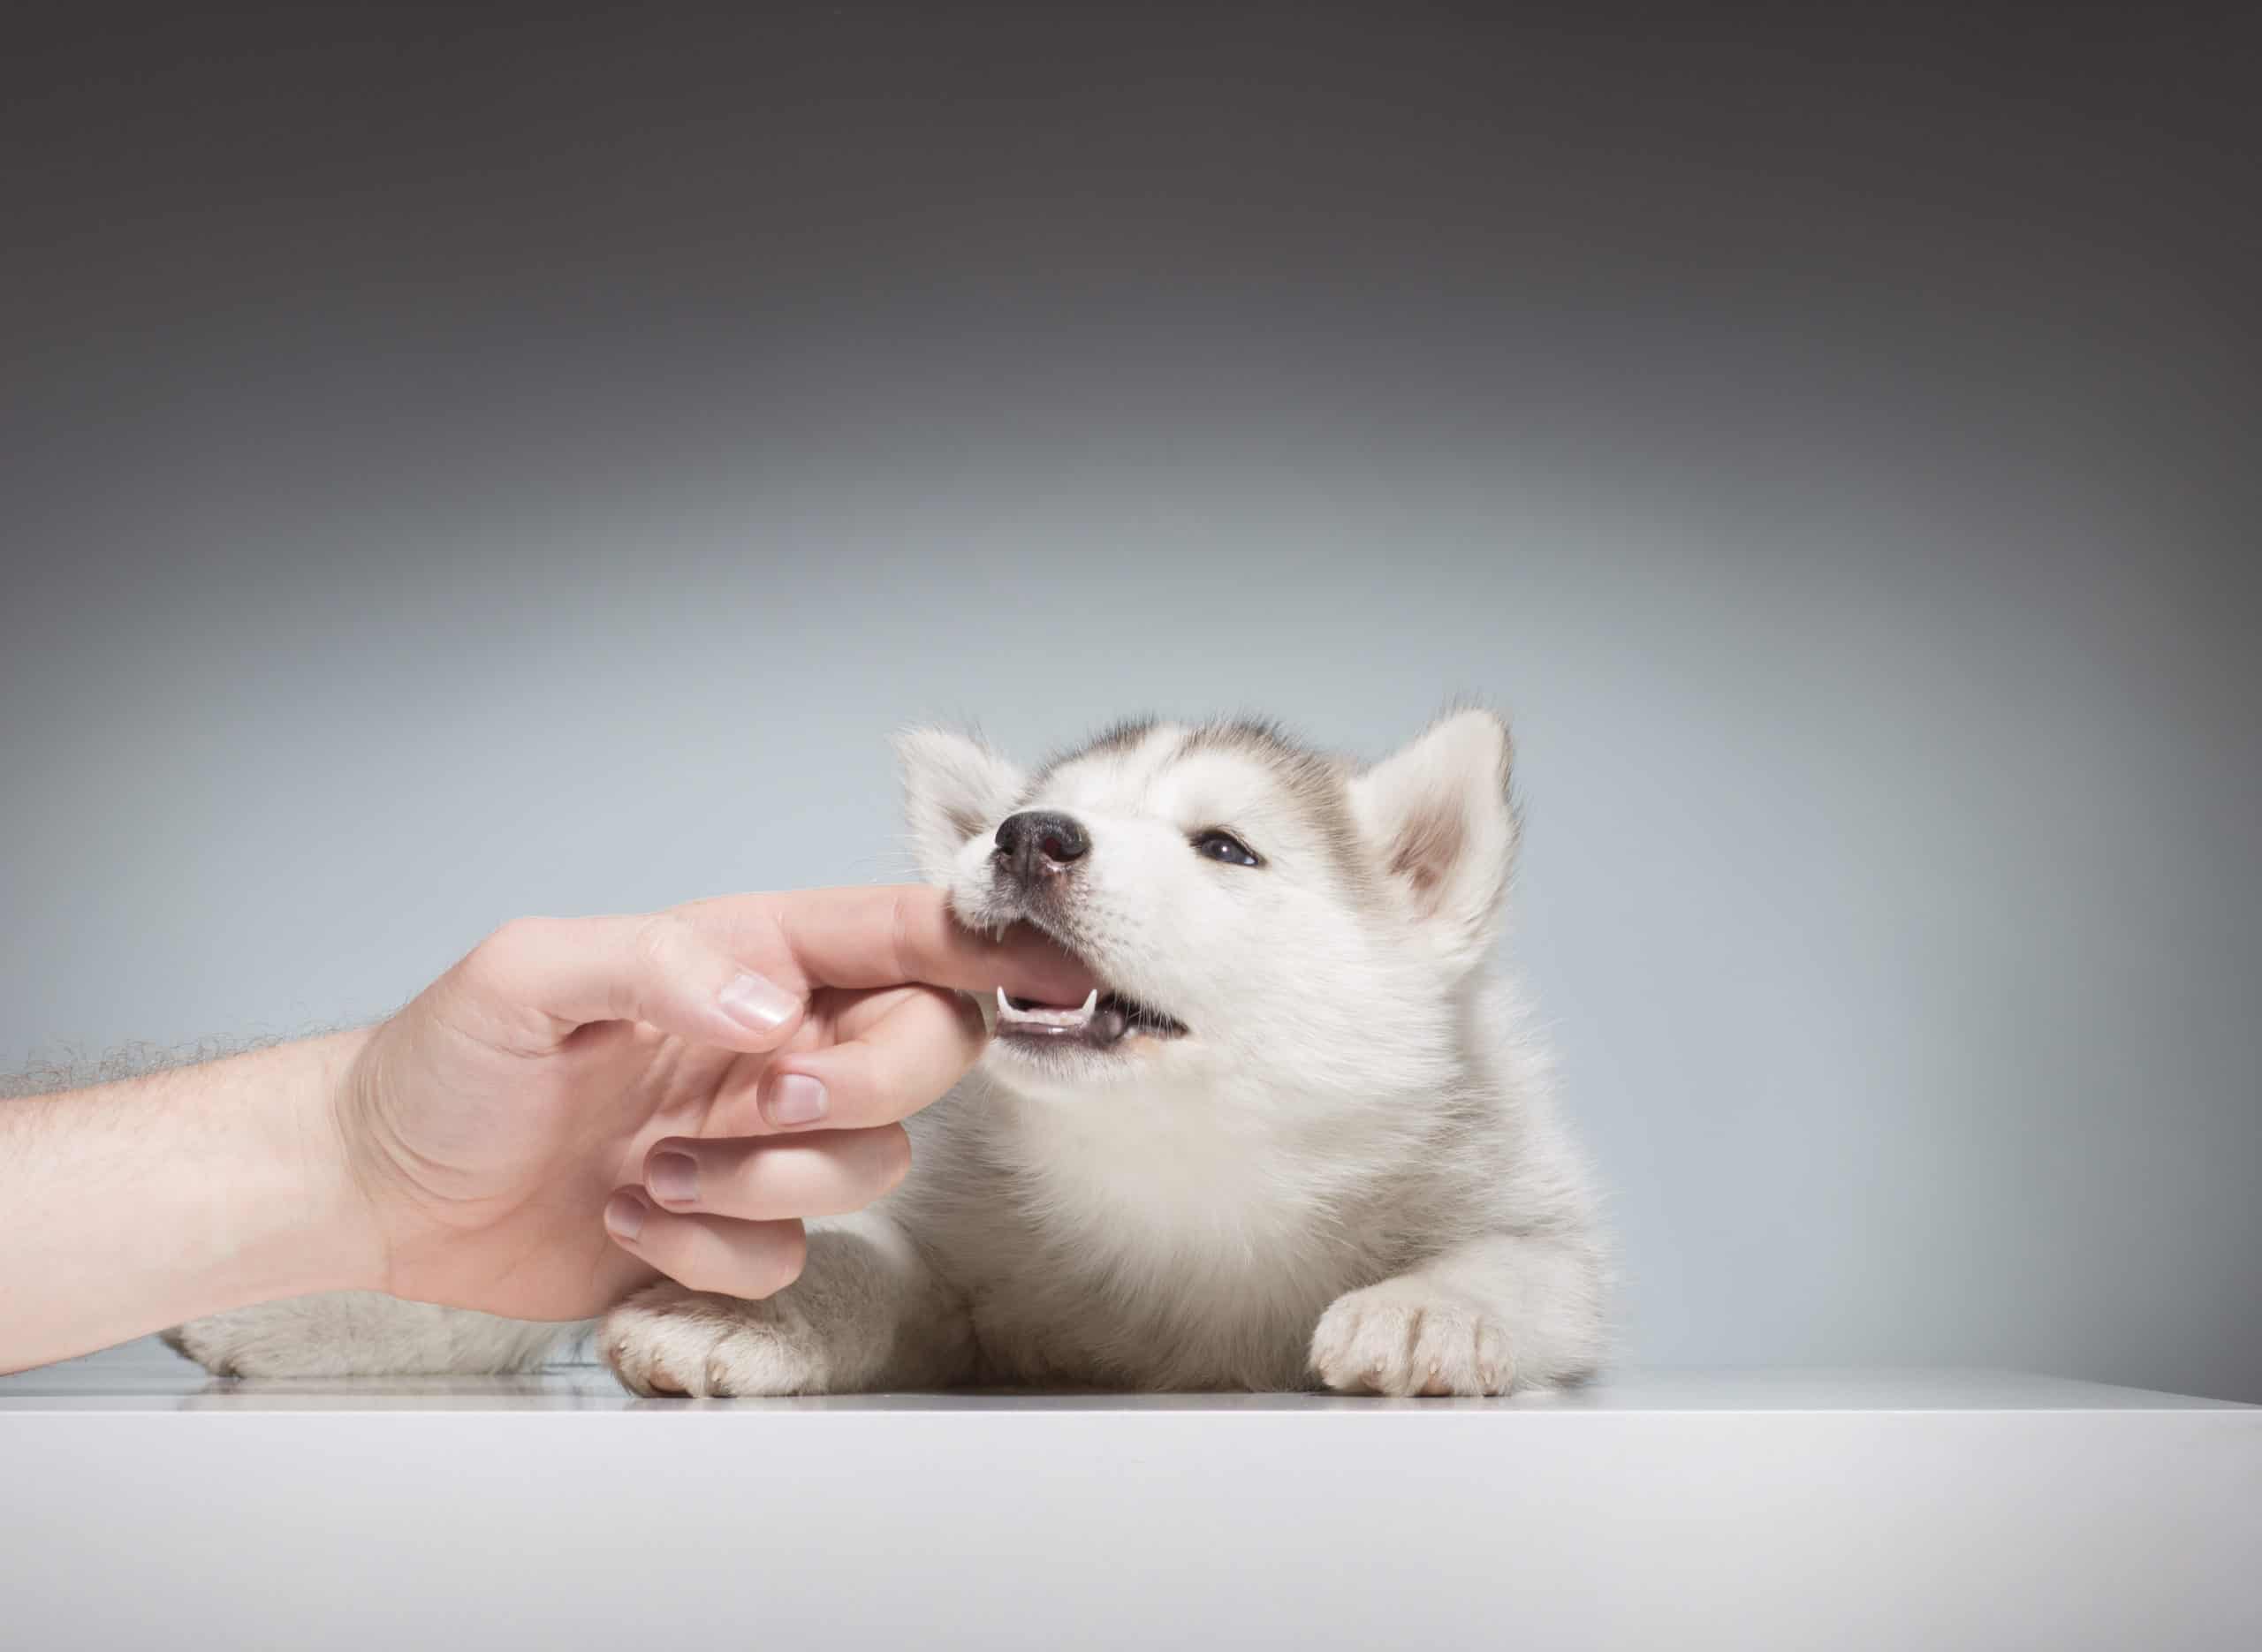 husky puppy biting playing human hand